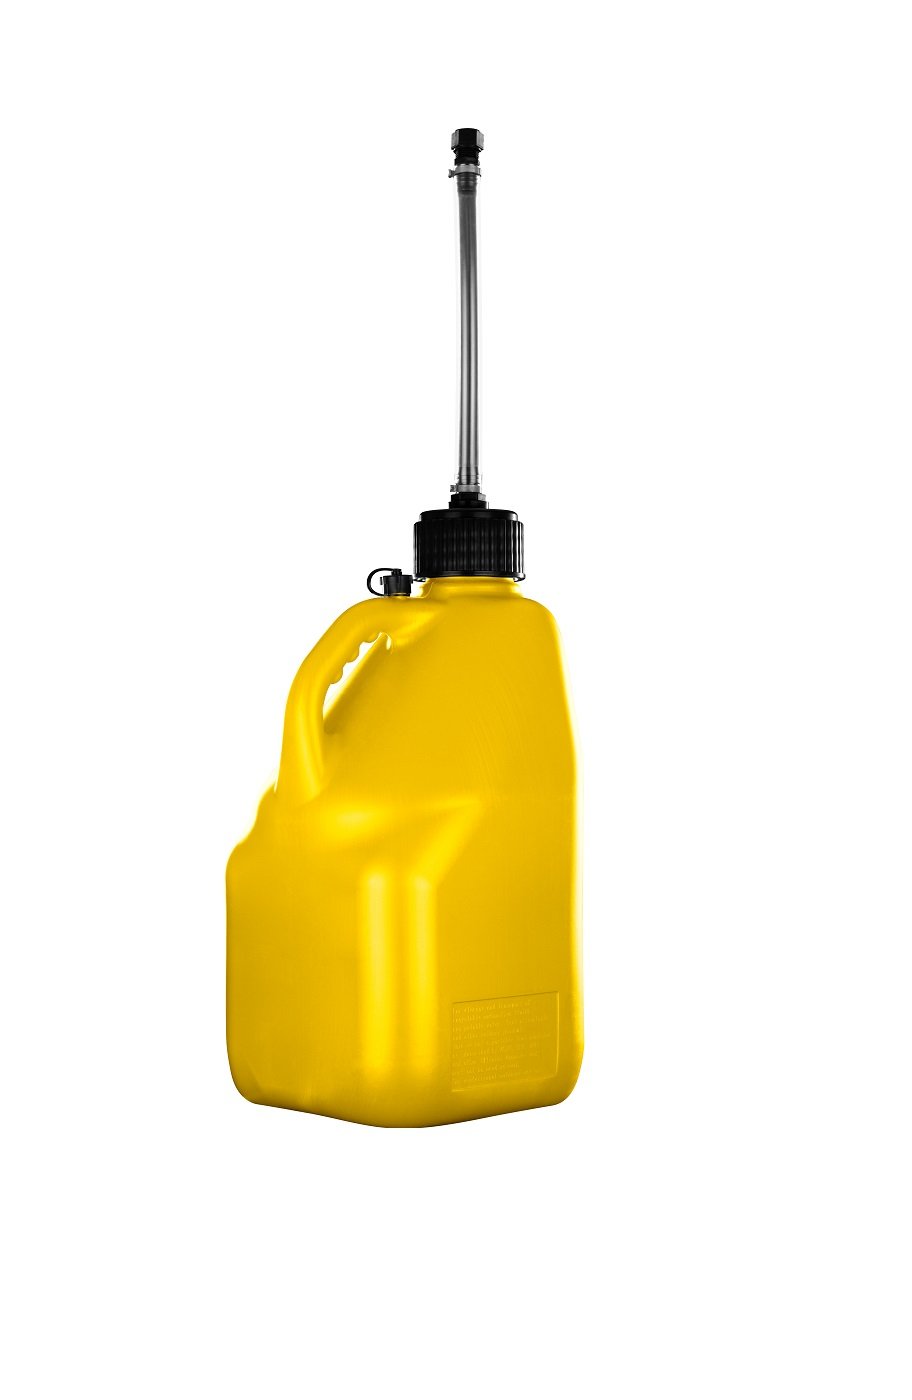 Yellow Utility Jug, 5 Gallon - 4063